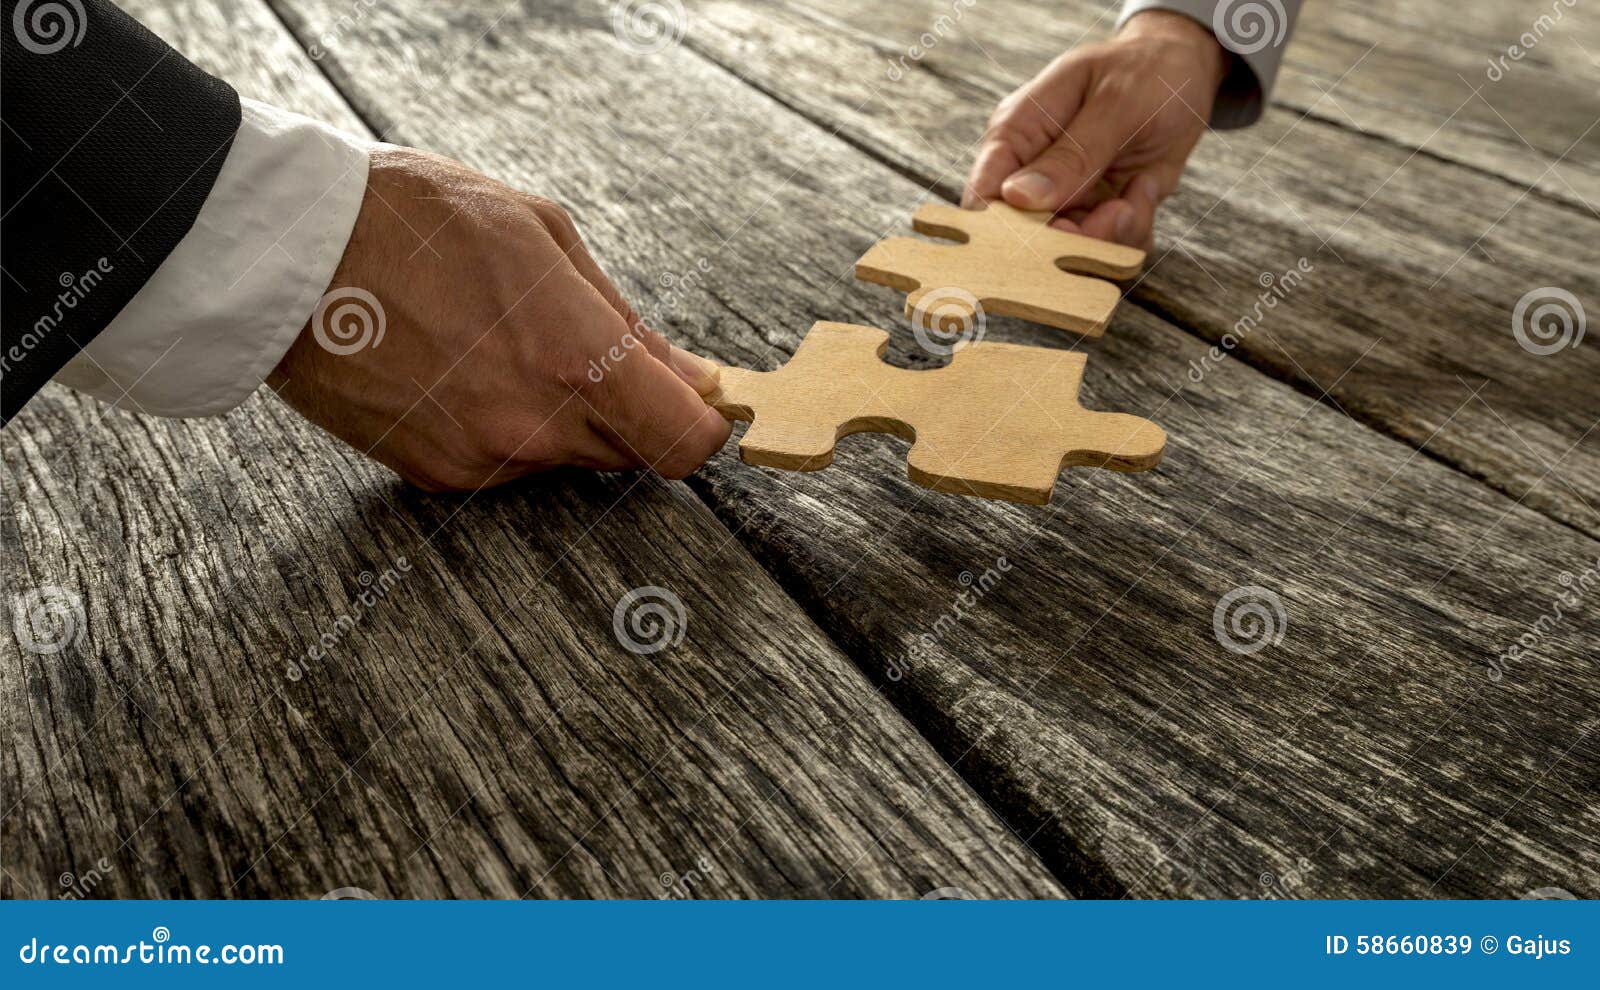 business partnership or teamwork